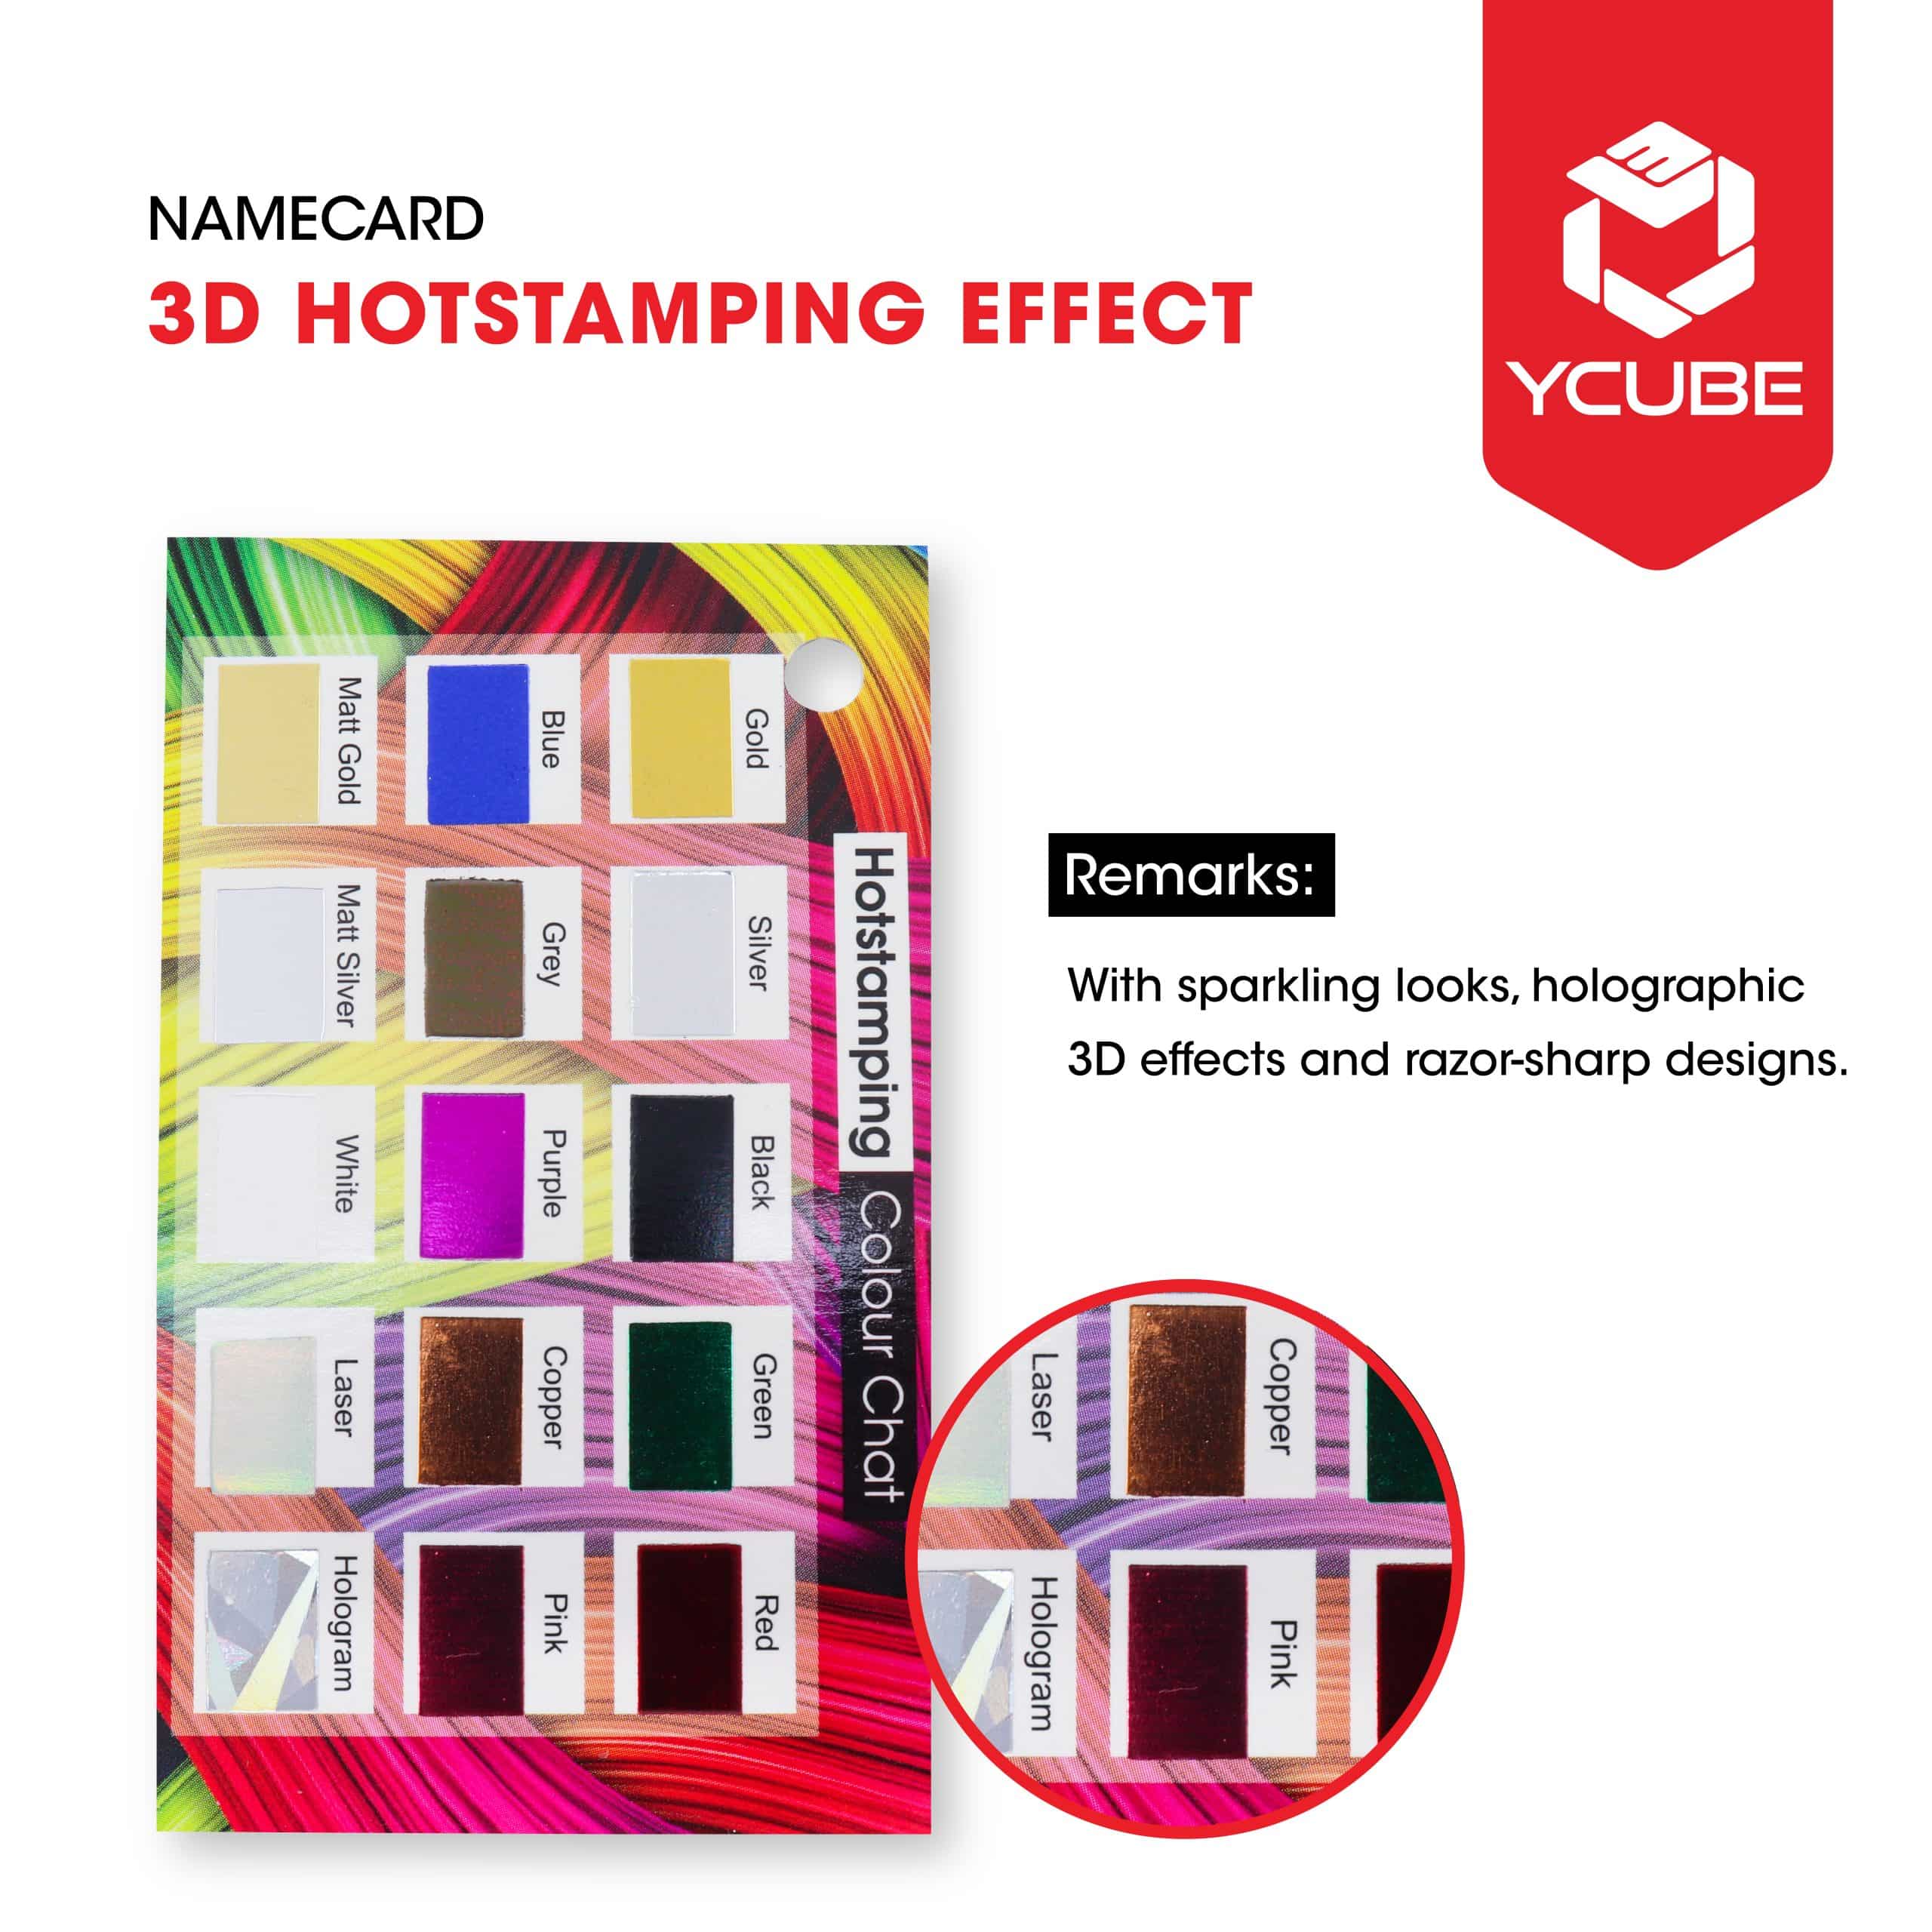 Namecard 3D Hotstamping Effect